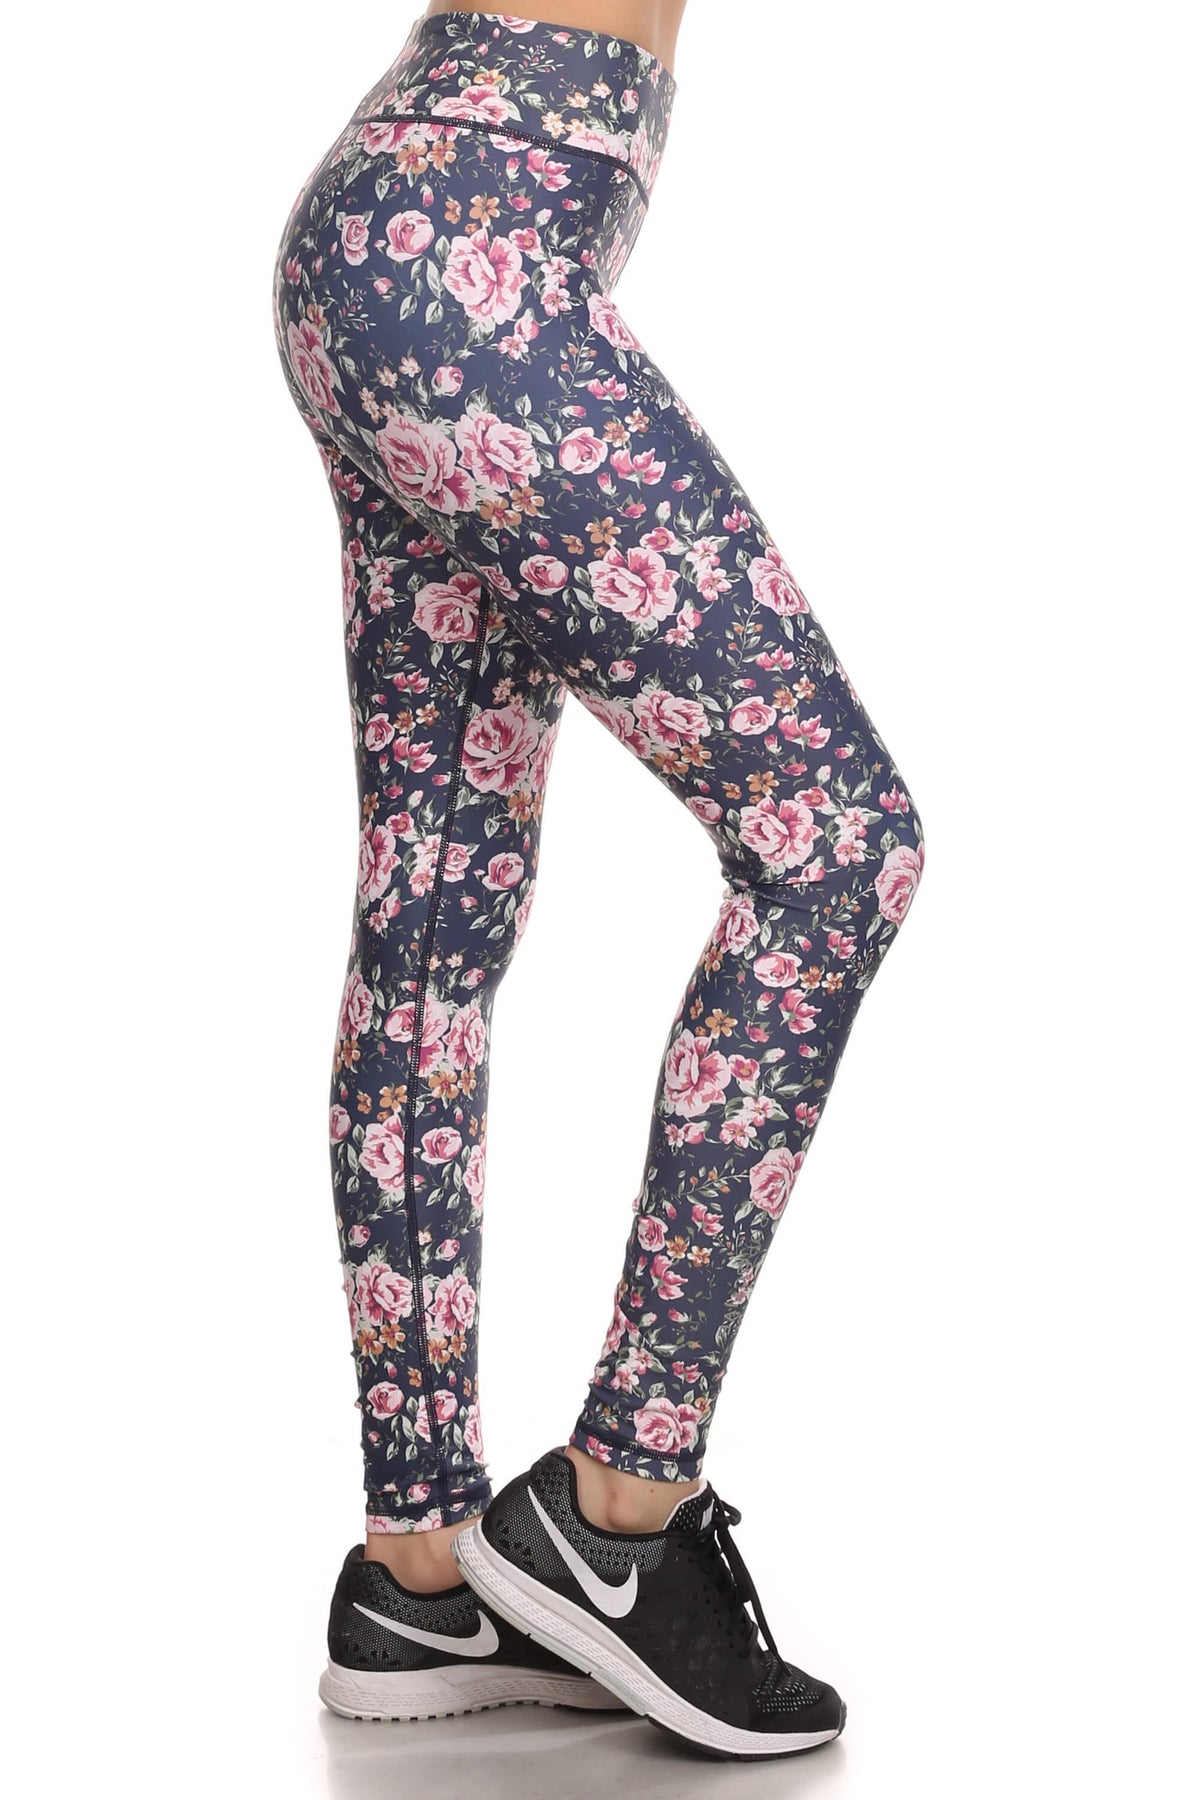 Vintage Floral Leggings Pink Floral Leggings, White Floral Leggings,  Vintage Pattern Yoga Leggings, Pink Yoga Activewear, Pink Yoga Pants 